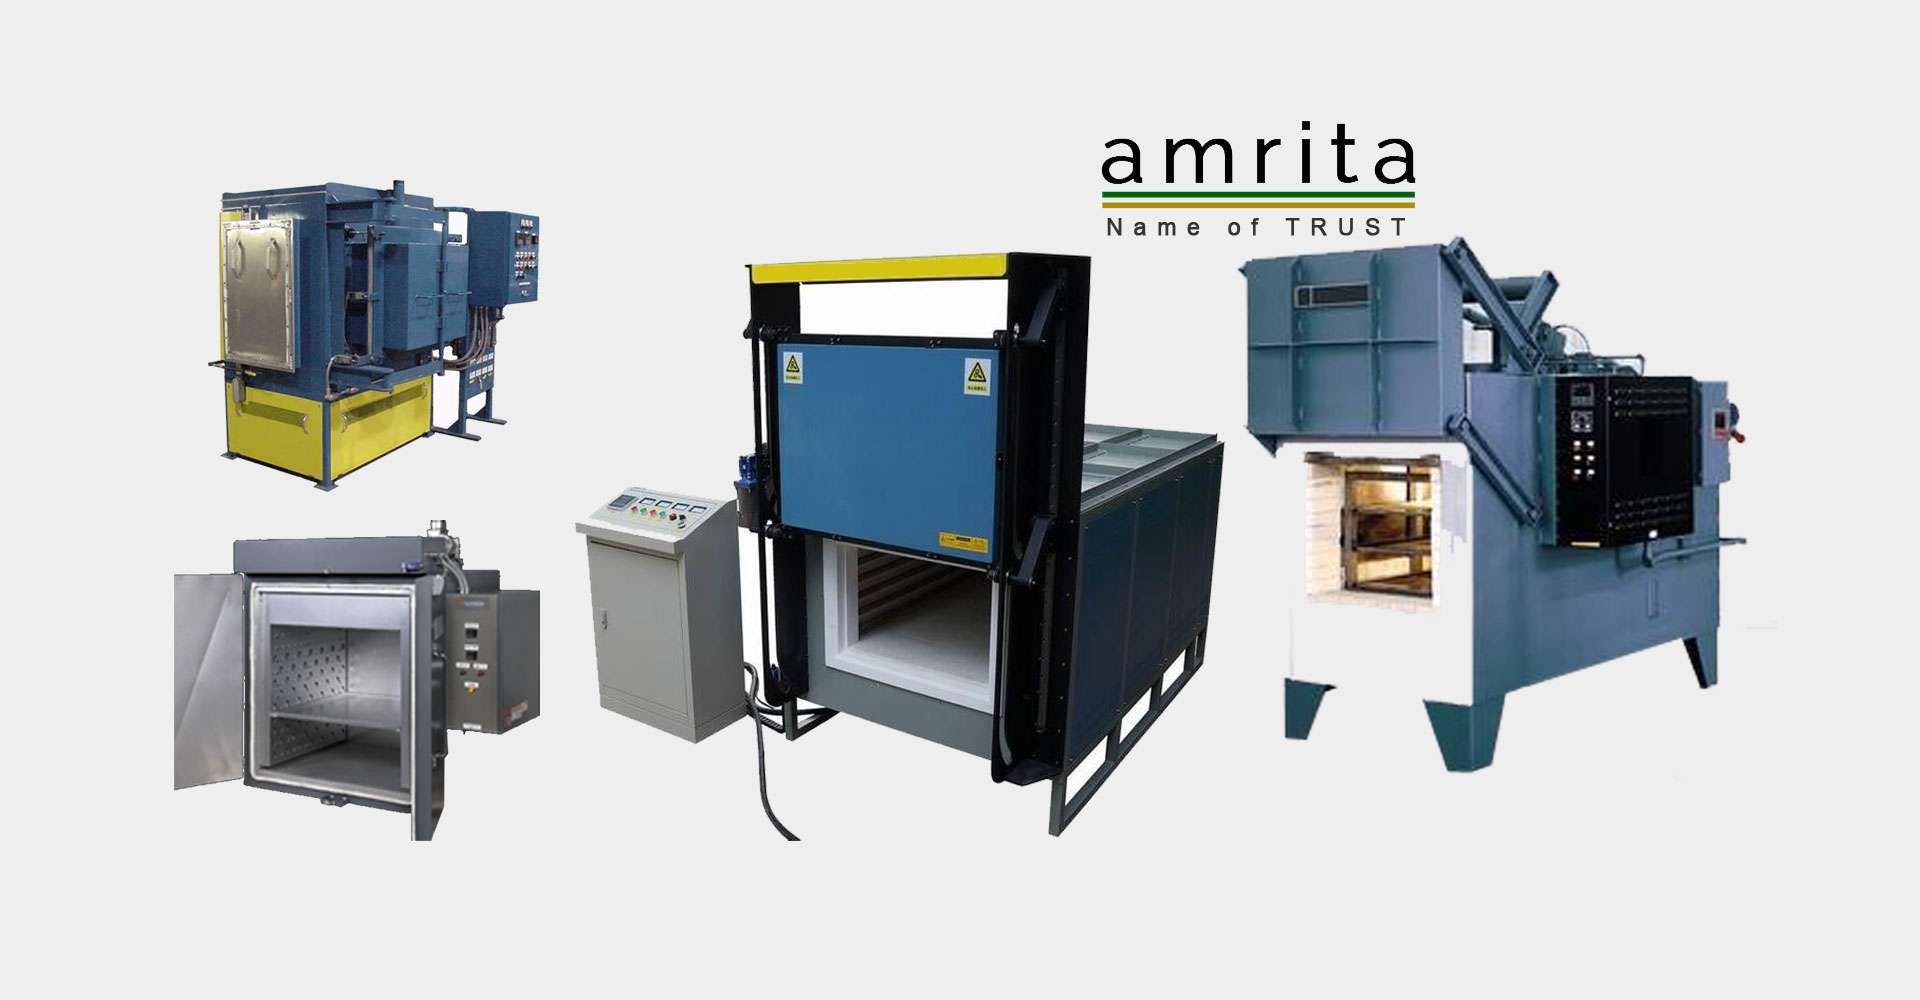 Amrita Thermal Equipment